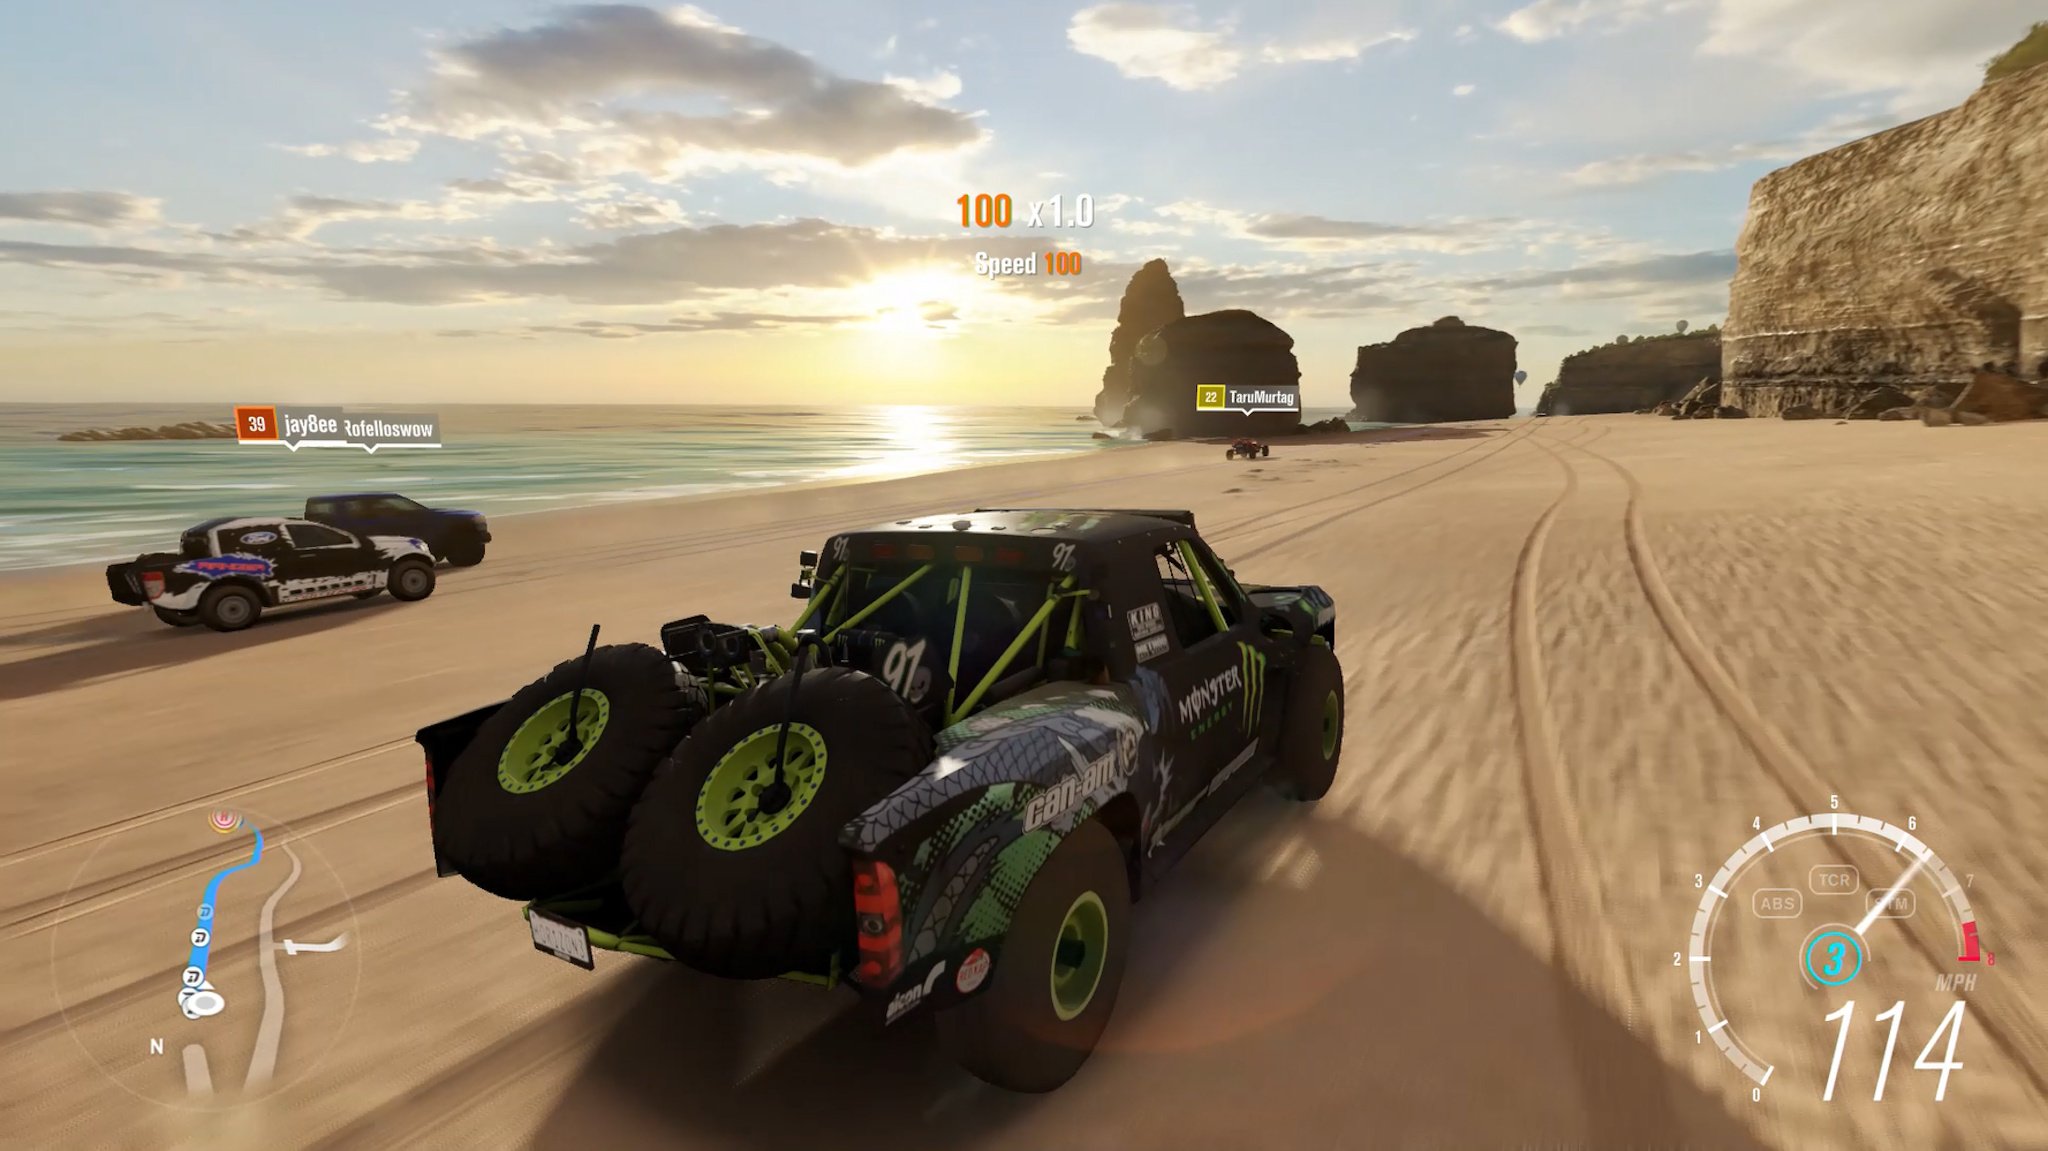 Forza-Horizon-3-E3-2016-Screenshots-Beach-main.jpg